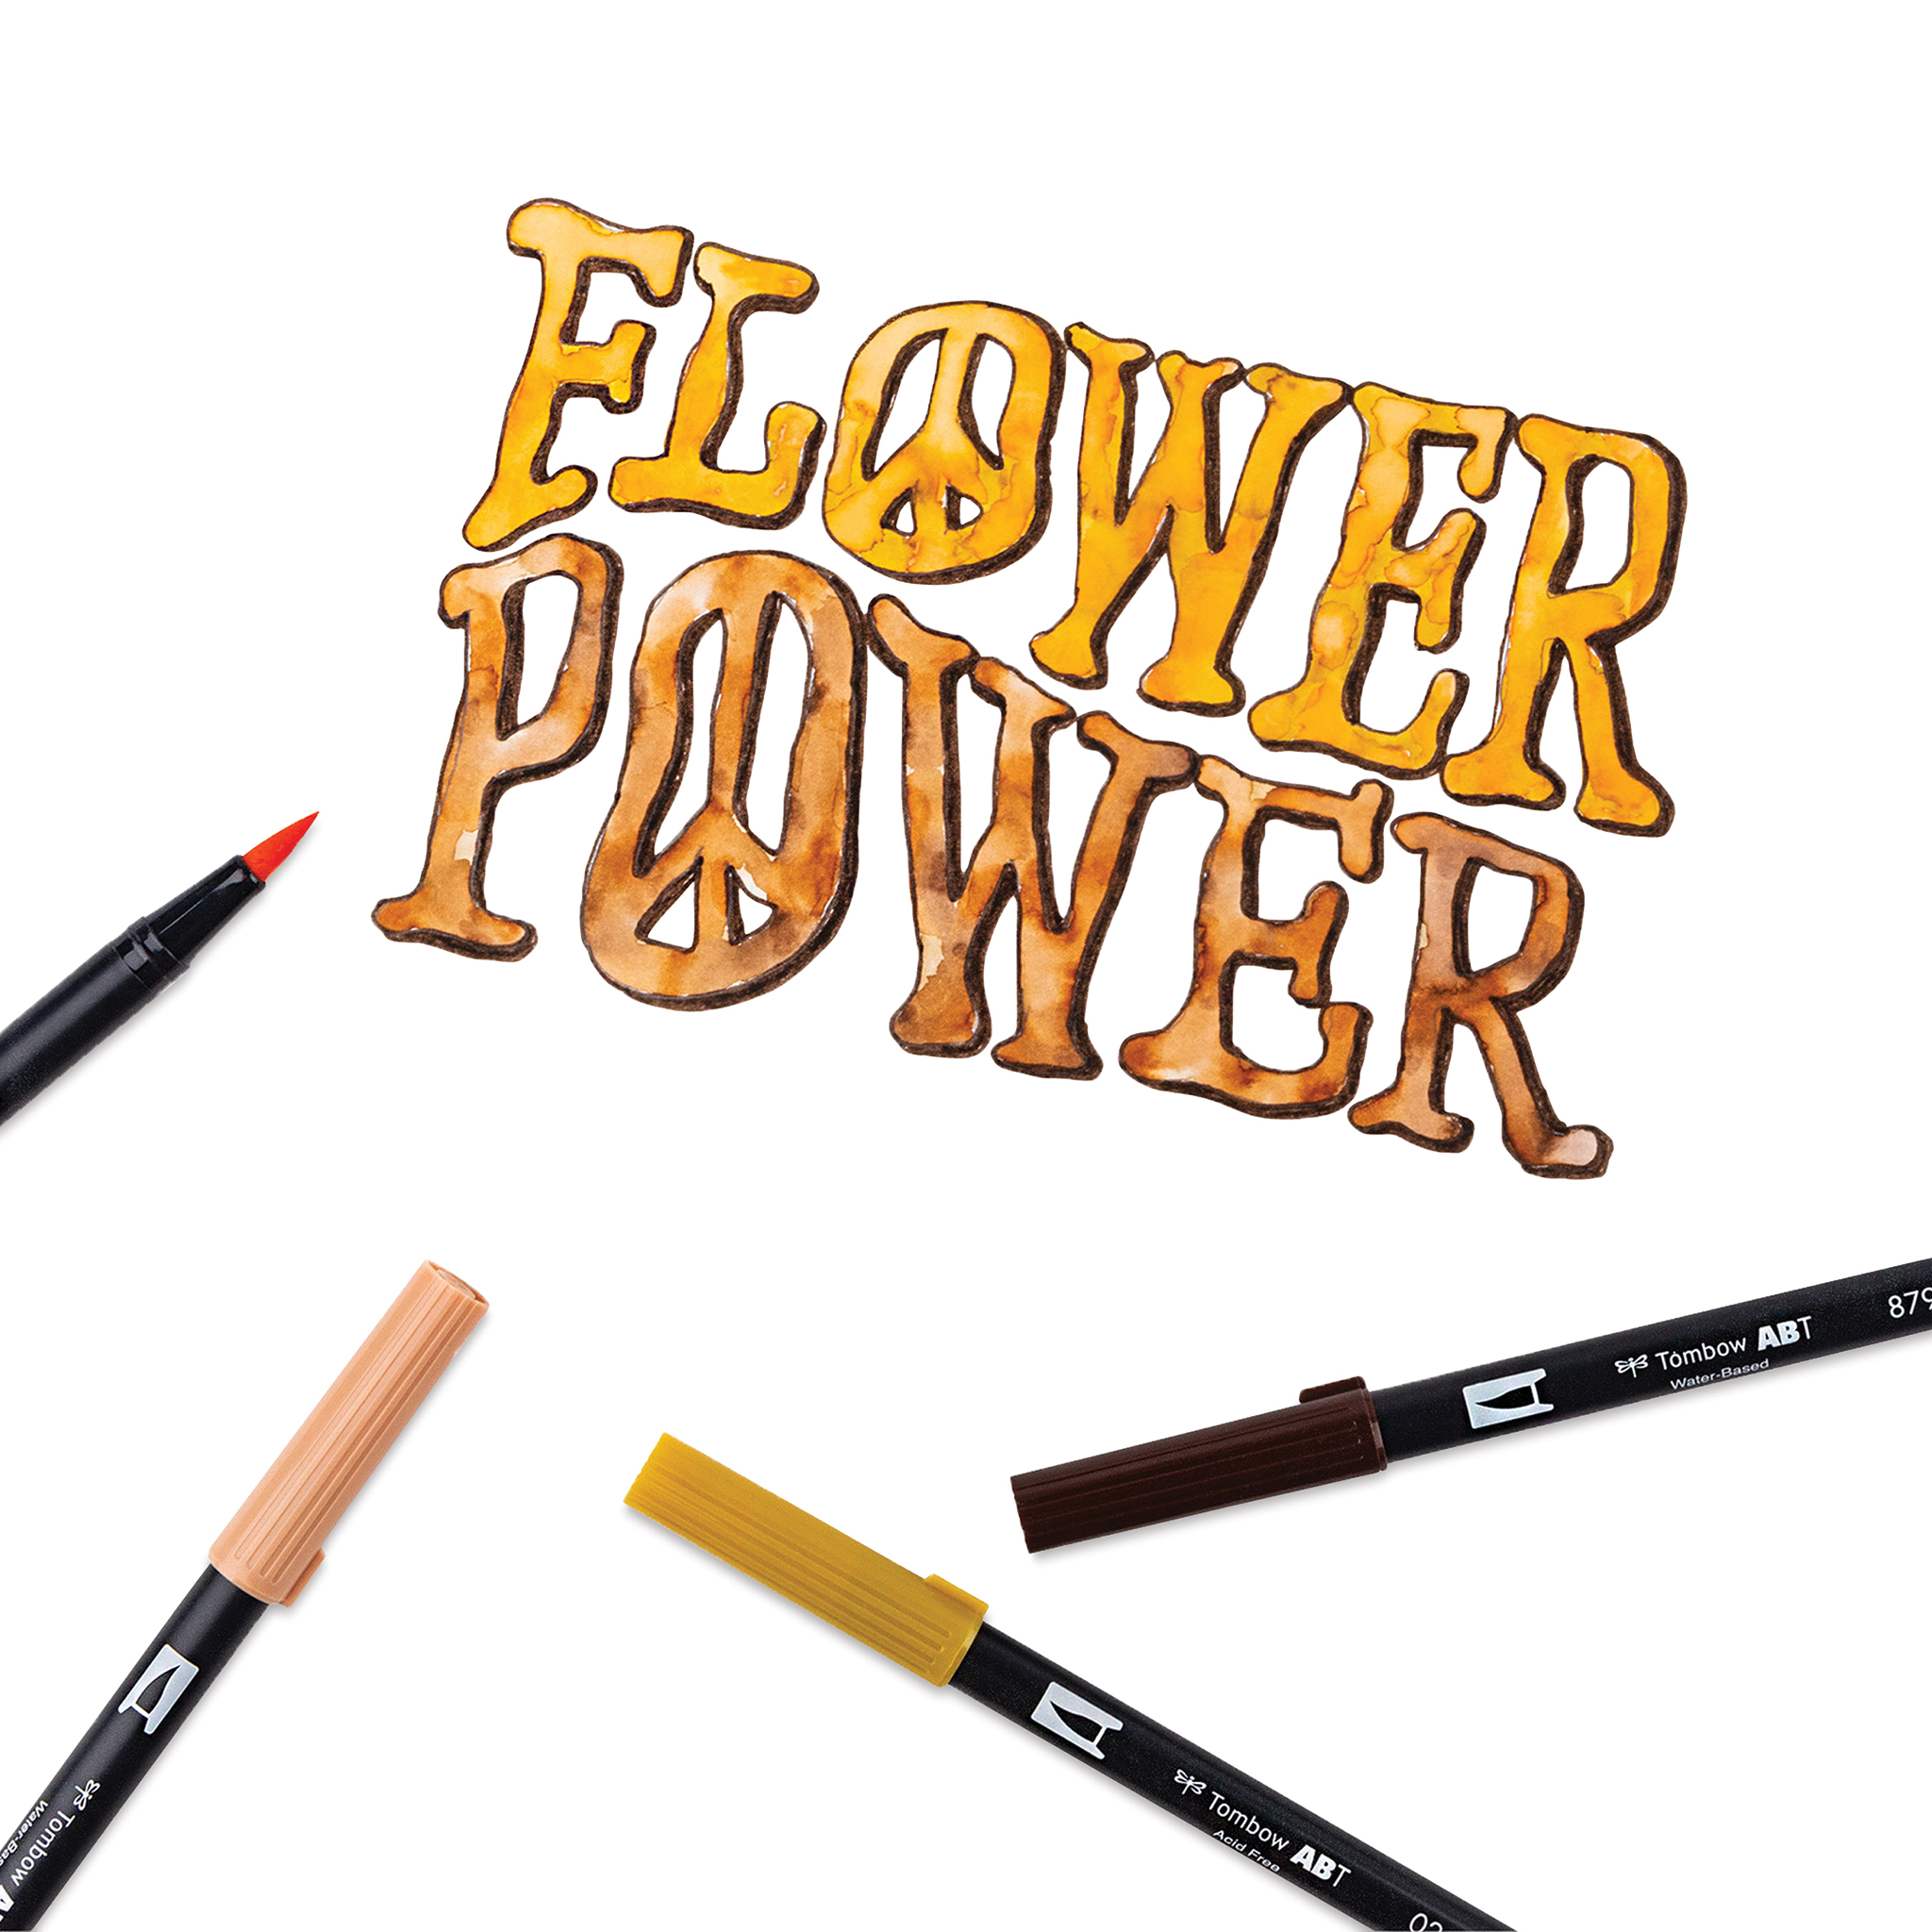 Tombow Dual Brush Pen - 20 Pen Set - Neutral Palette